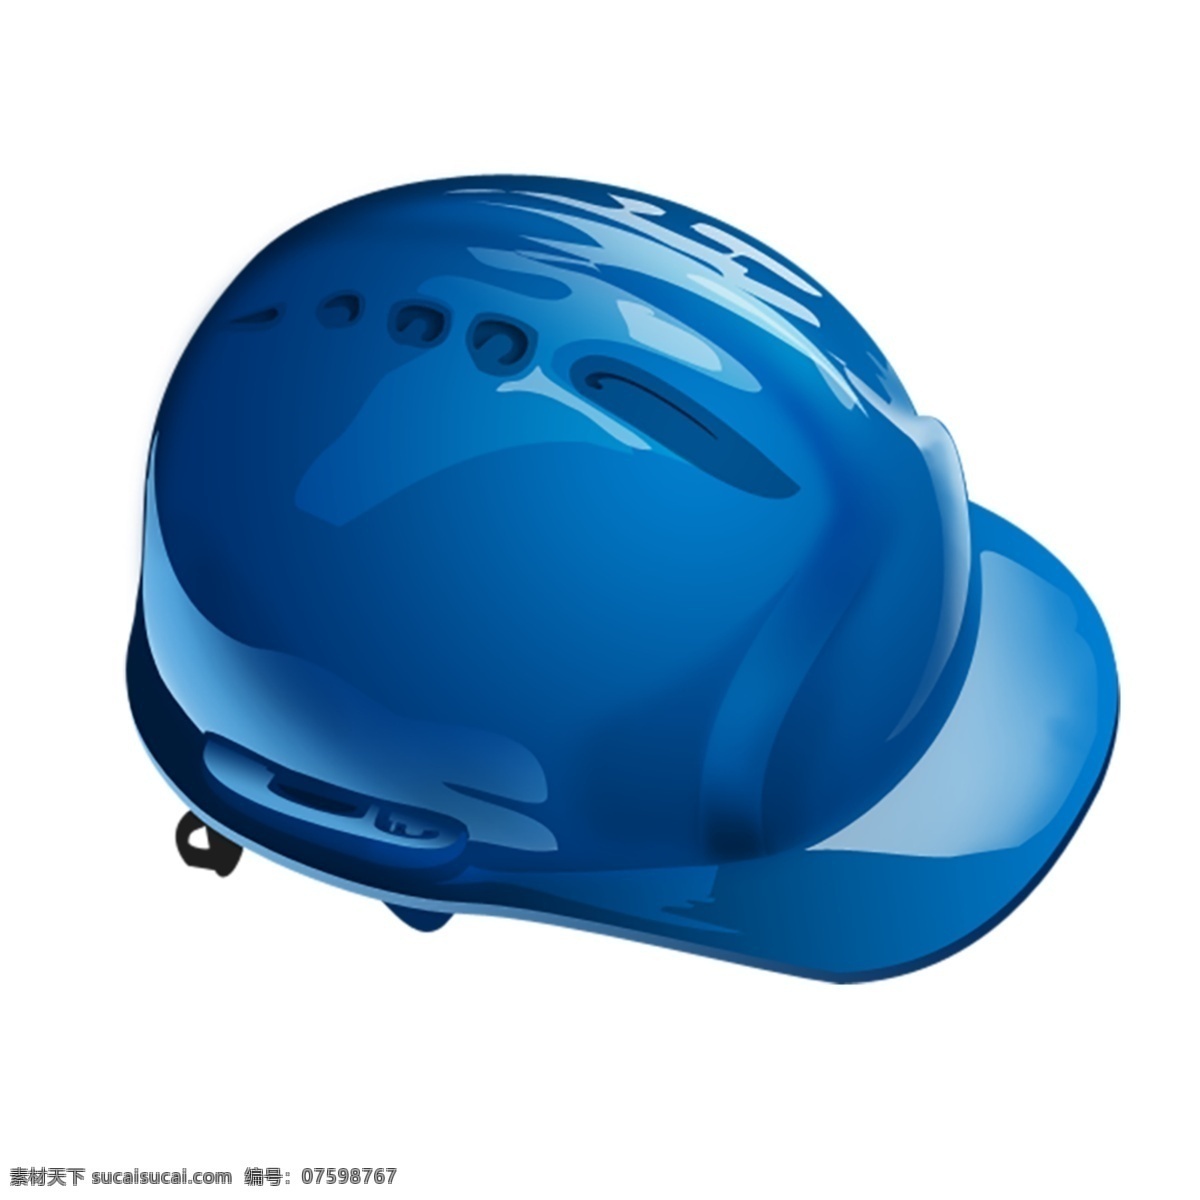 蓝色 安全帽 icon 图标 图标设计 icon设计 icon图标 网页图标 安全帽图标 帽子